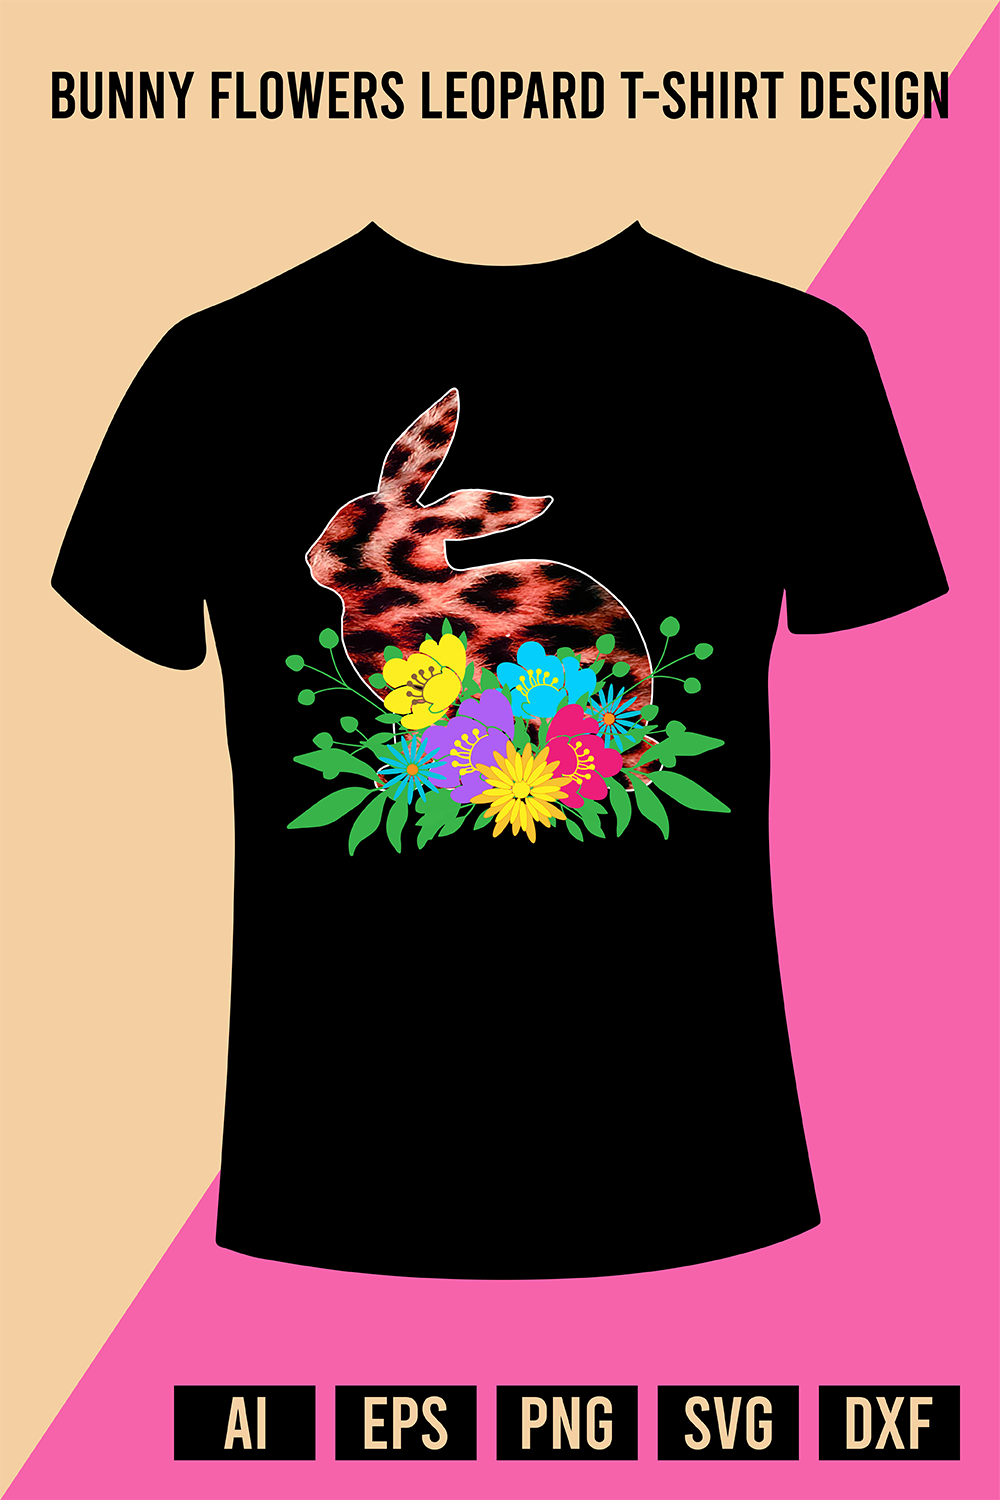 Bunny Flowers Leopard T-Shirt Design pinterest preview image.